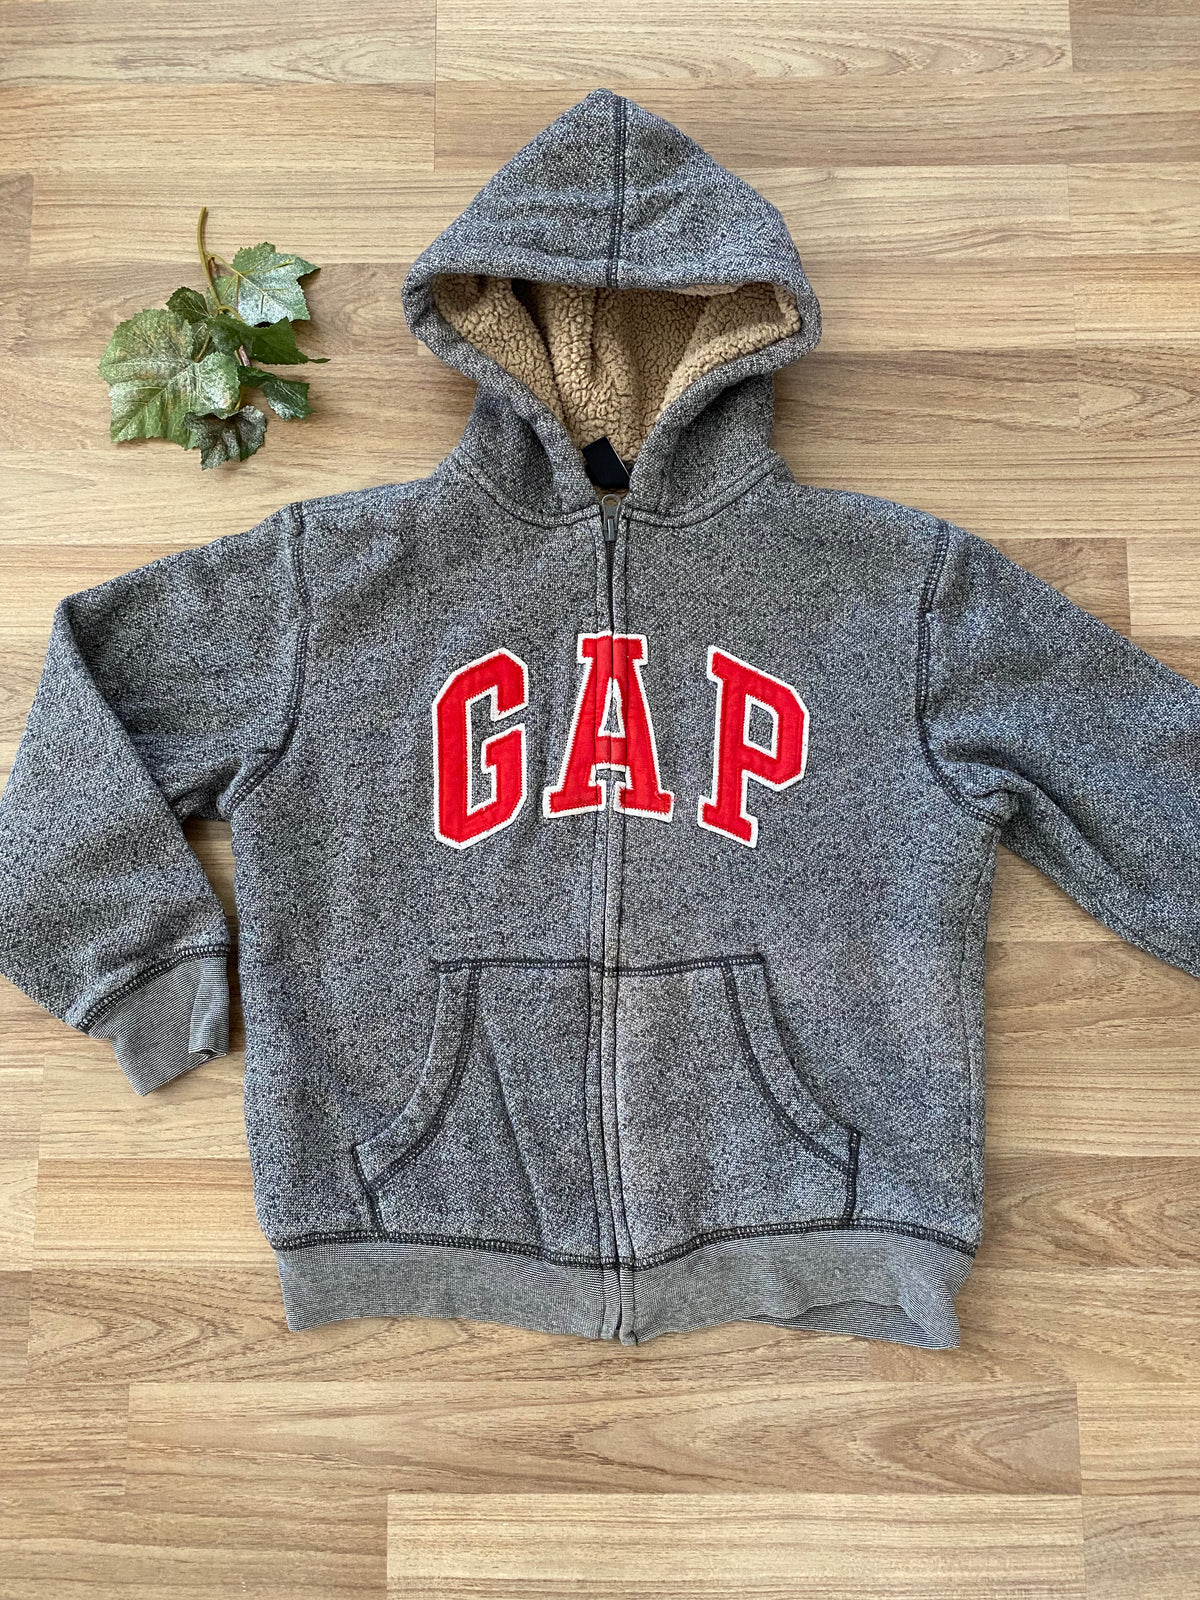 Full Zip Hooded Sweater/Jacket (Boys Size 10-11)